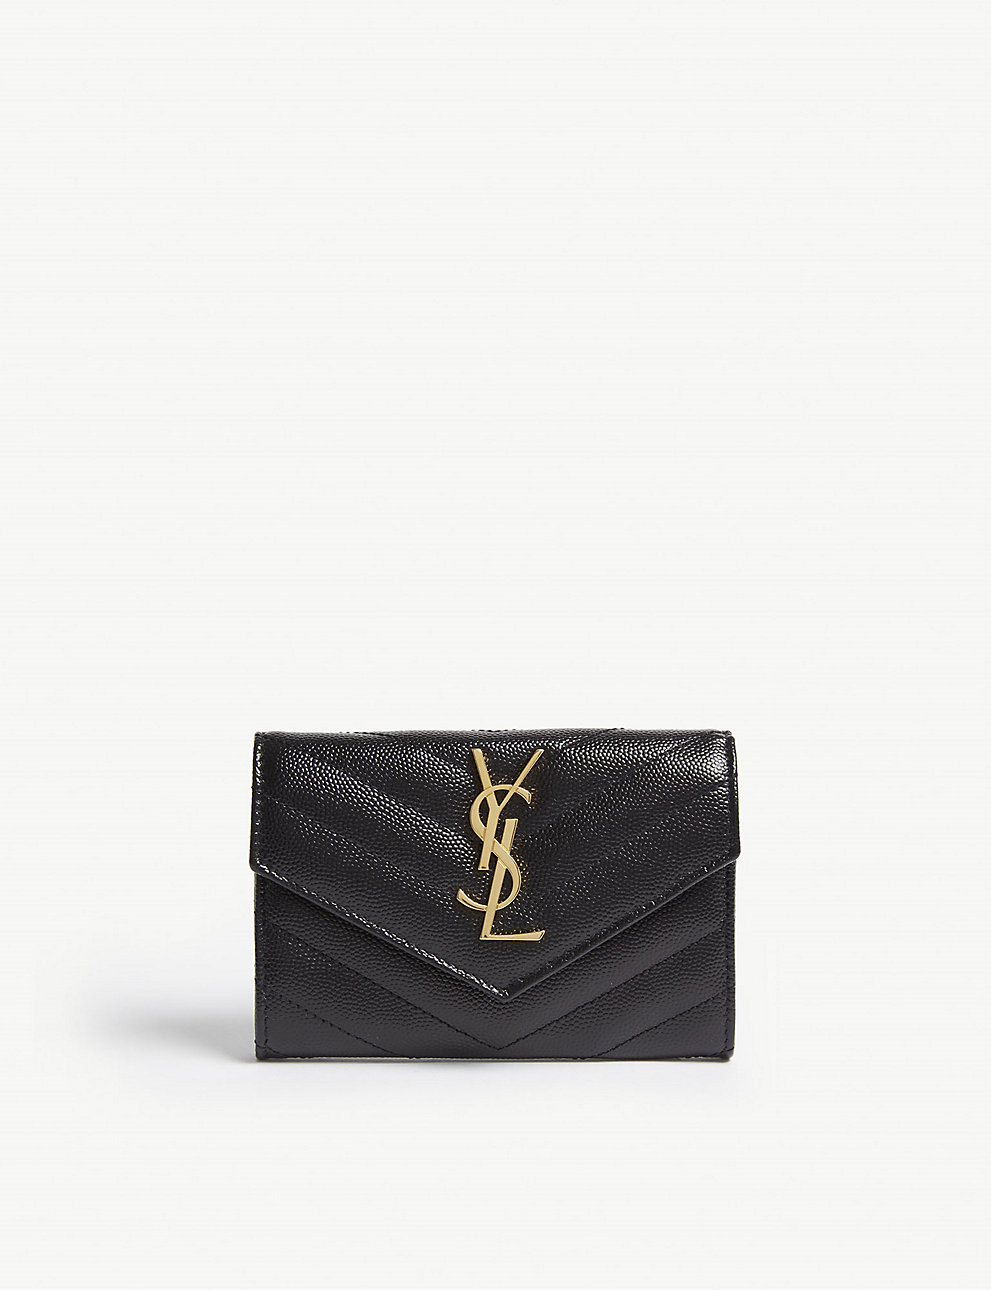 425. YSL Monogram Matelassé  Key pouch, Bags, Designer wallets